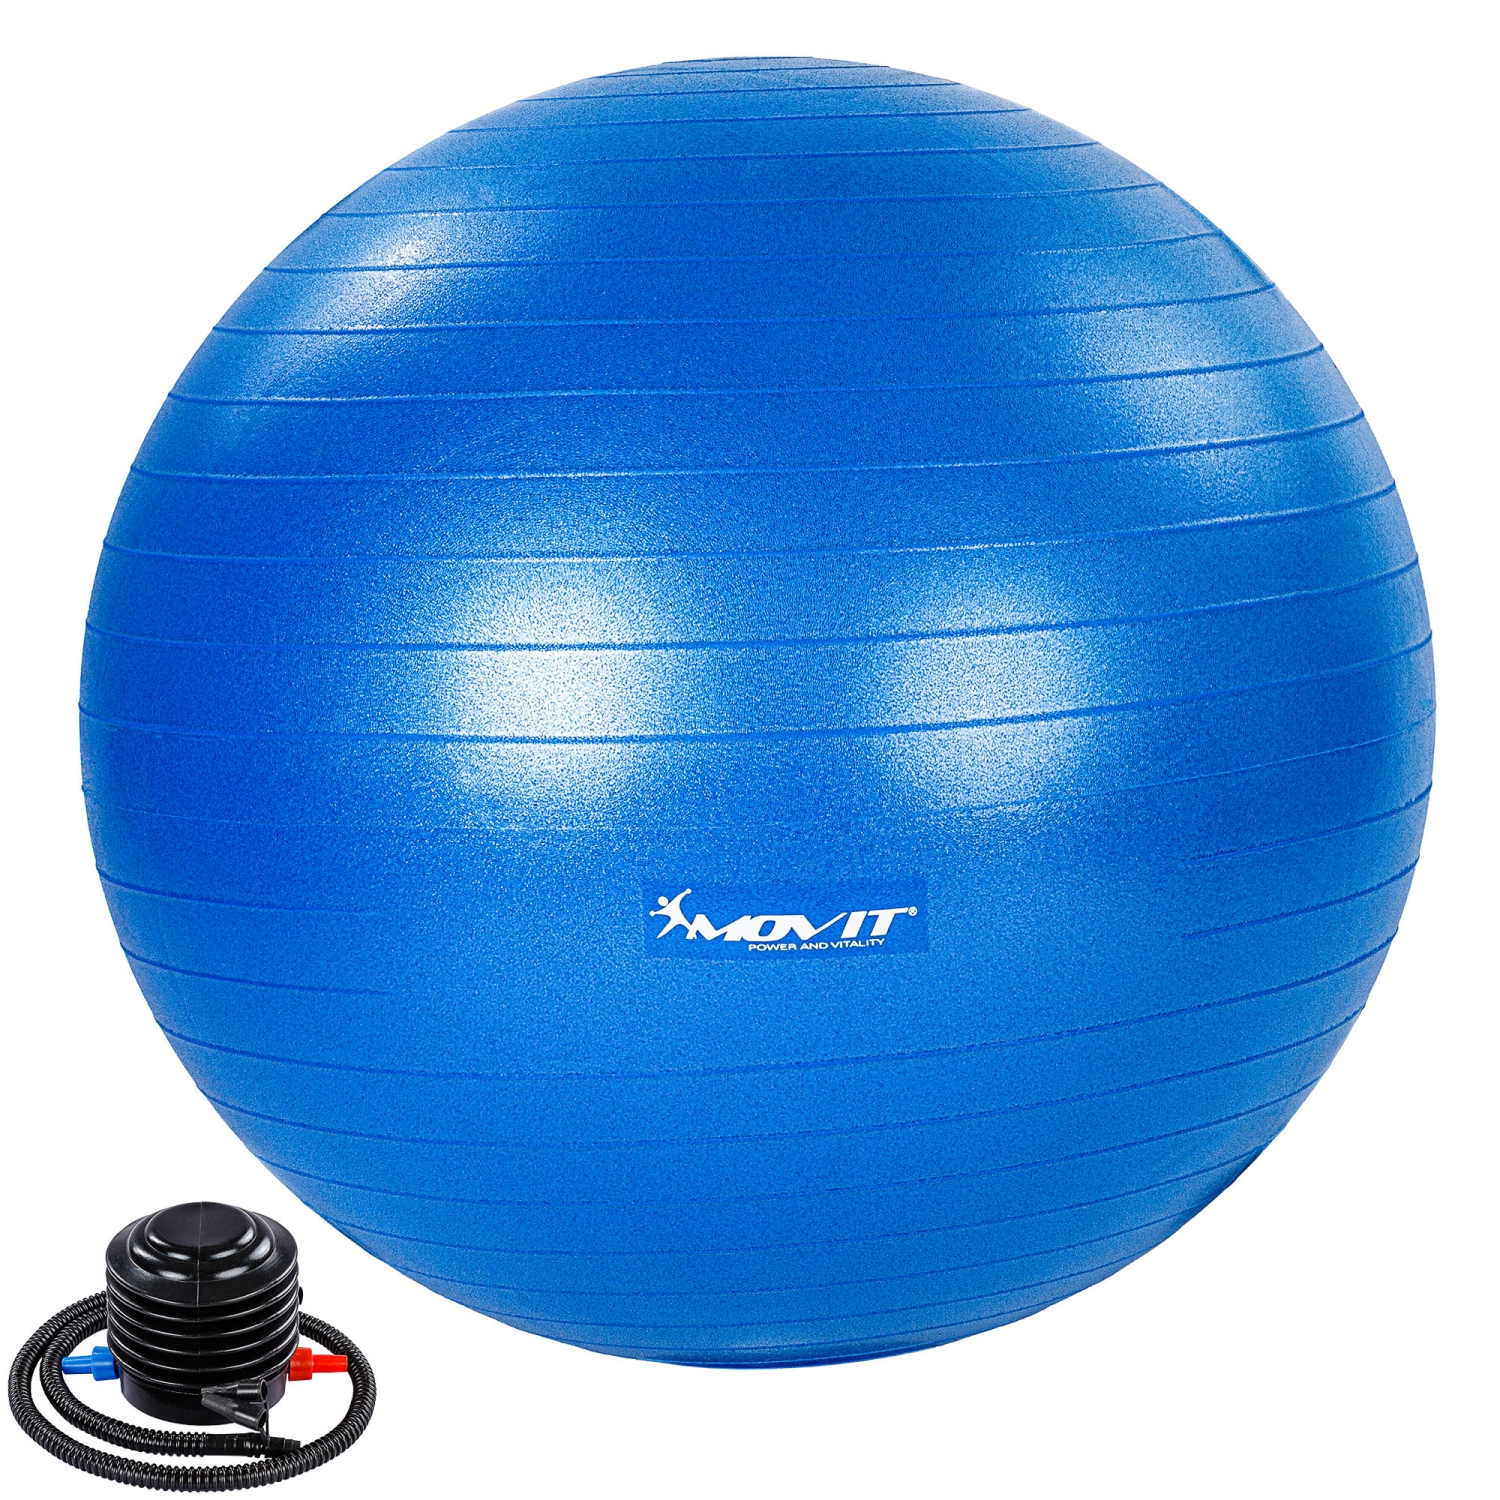 Yoga bal – Pilates bal – Fitness bal – 55 cm – Inclusief pomp – Blauw